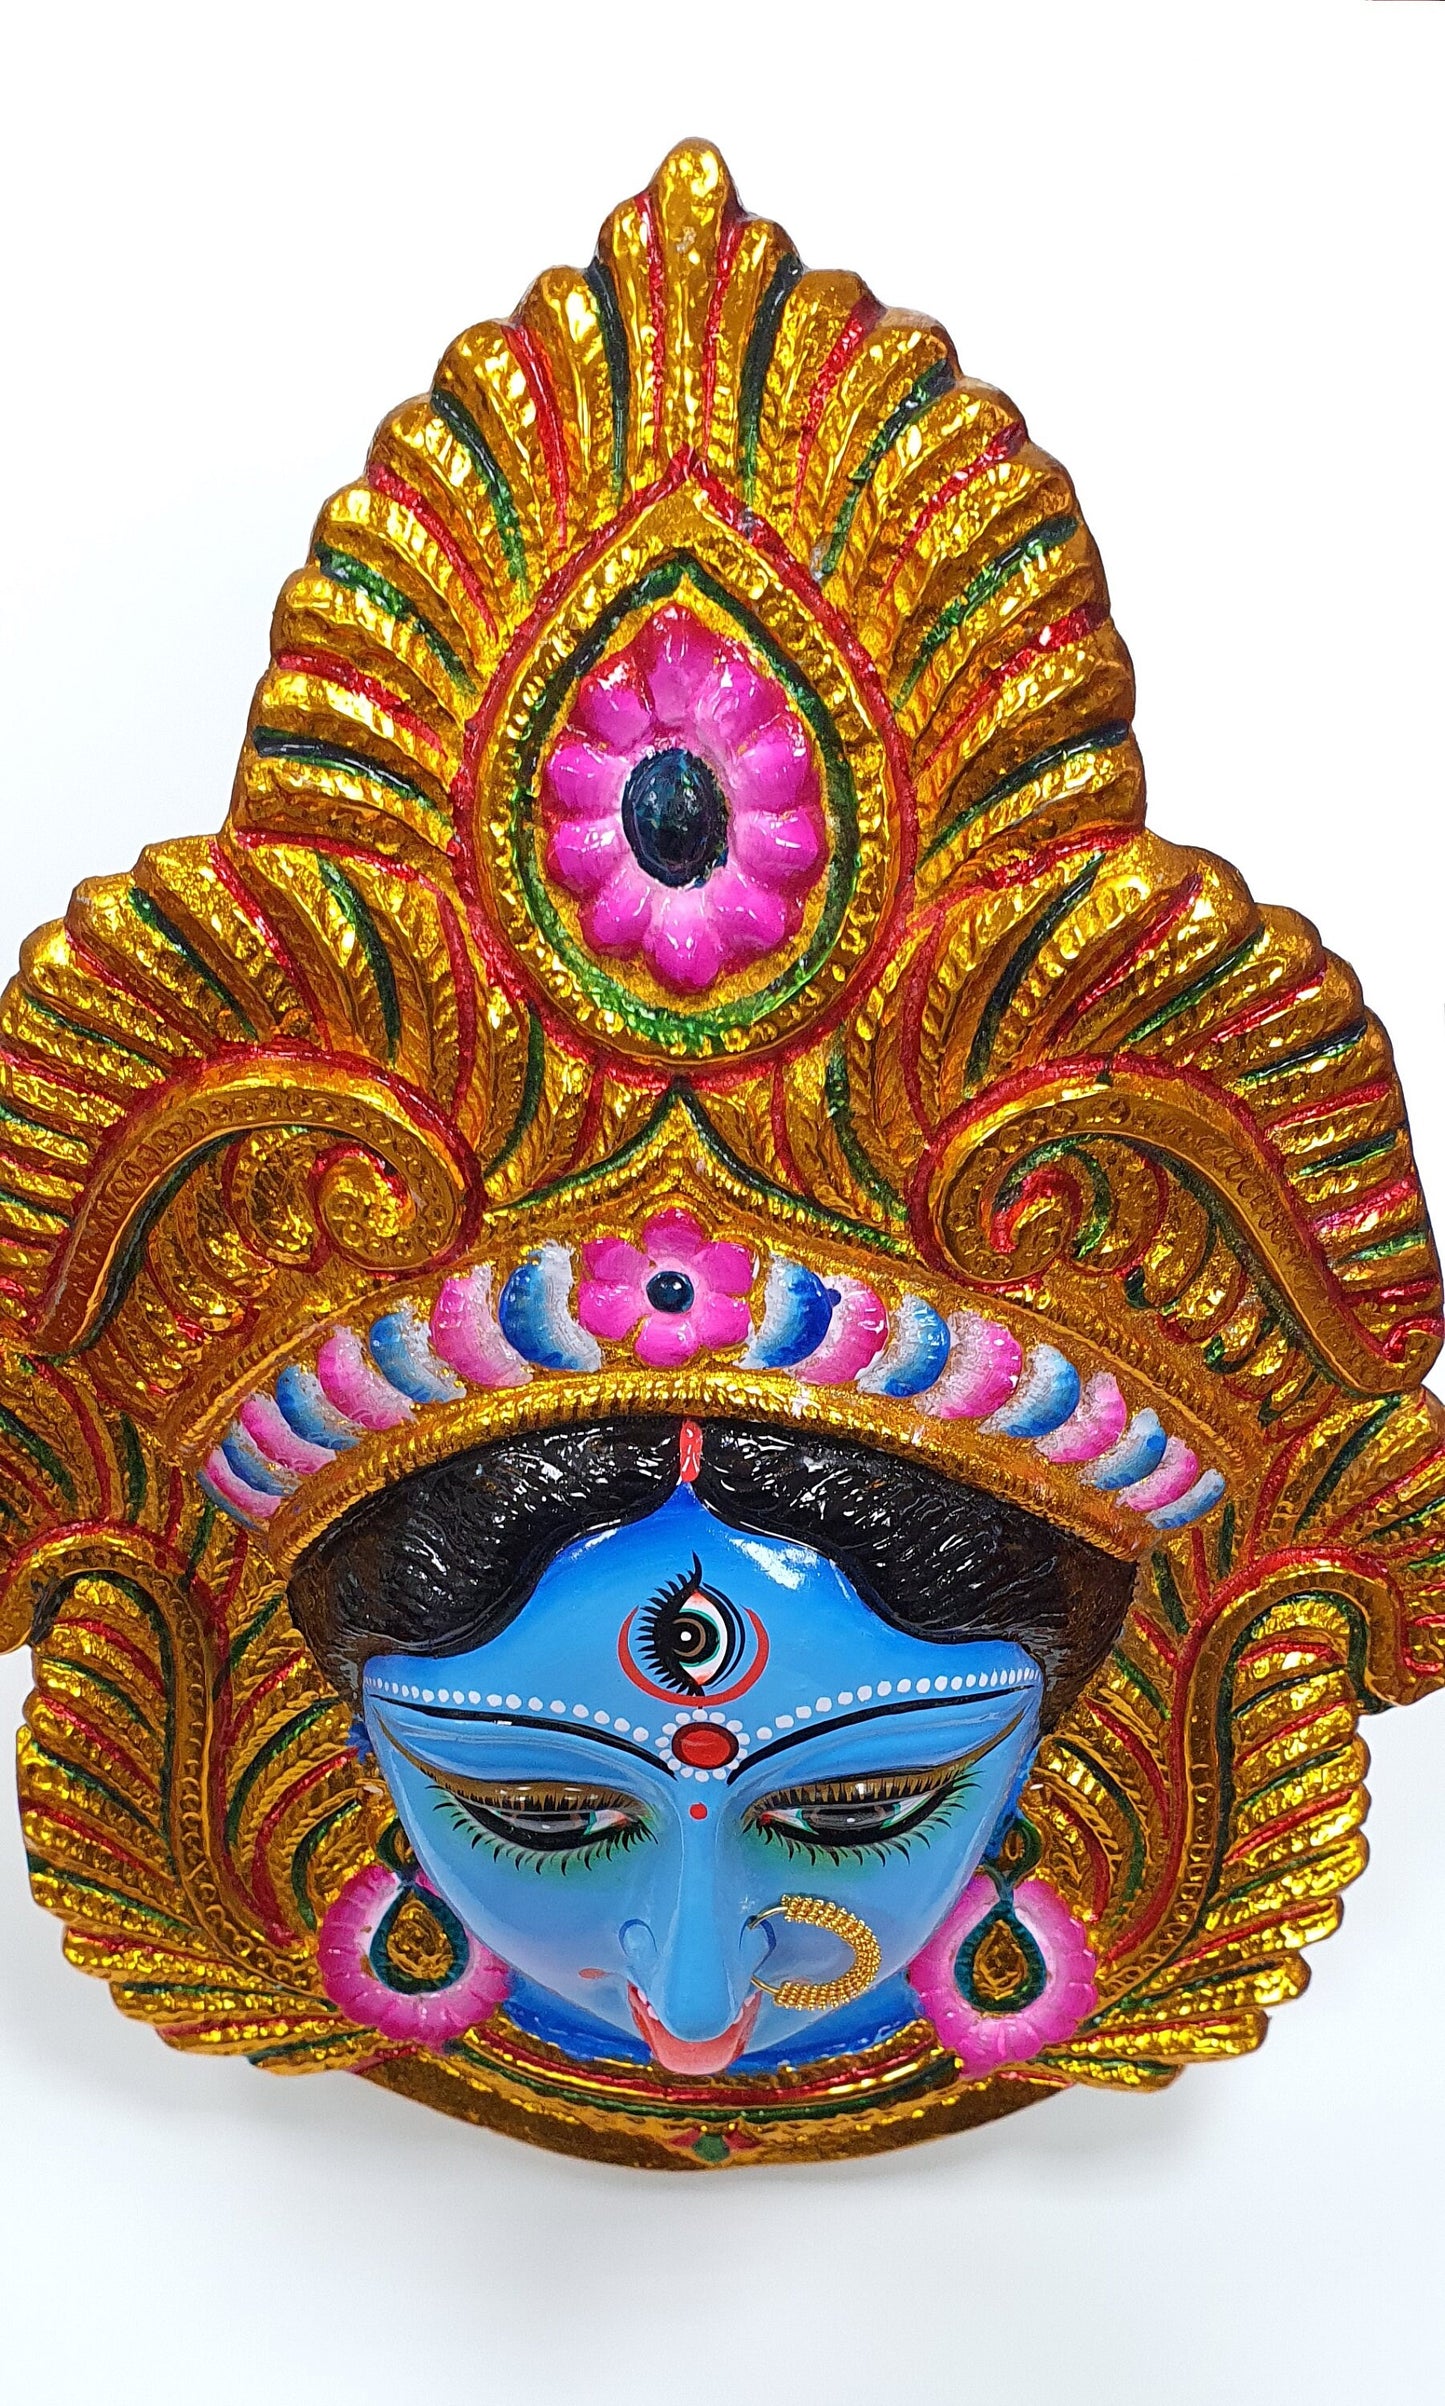 LARGE Rare Goddess Kali Maa/Mata ( Durga ) Wall Hanging Face With Nose Ring